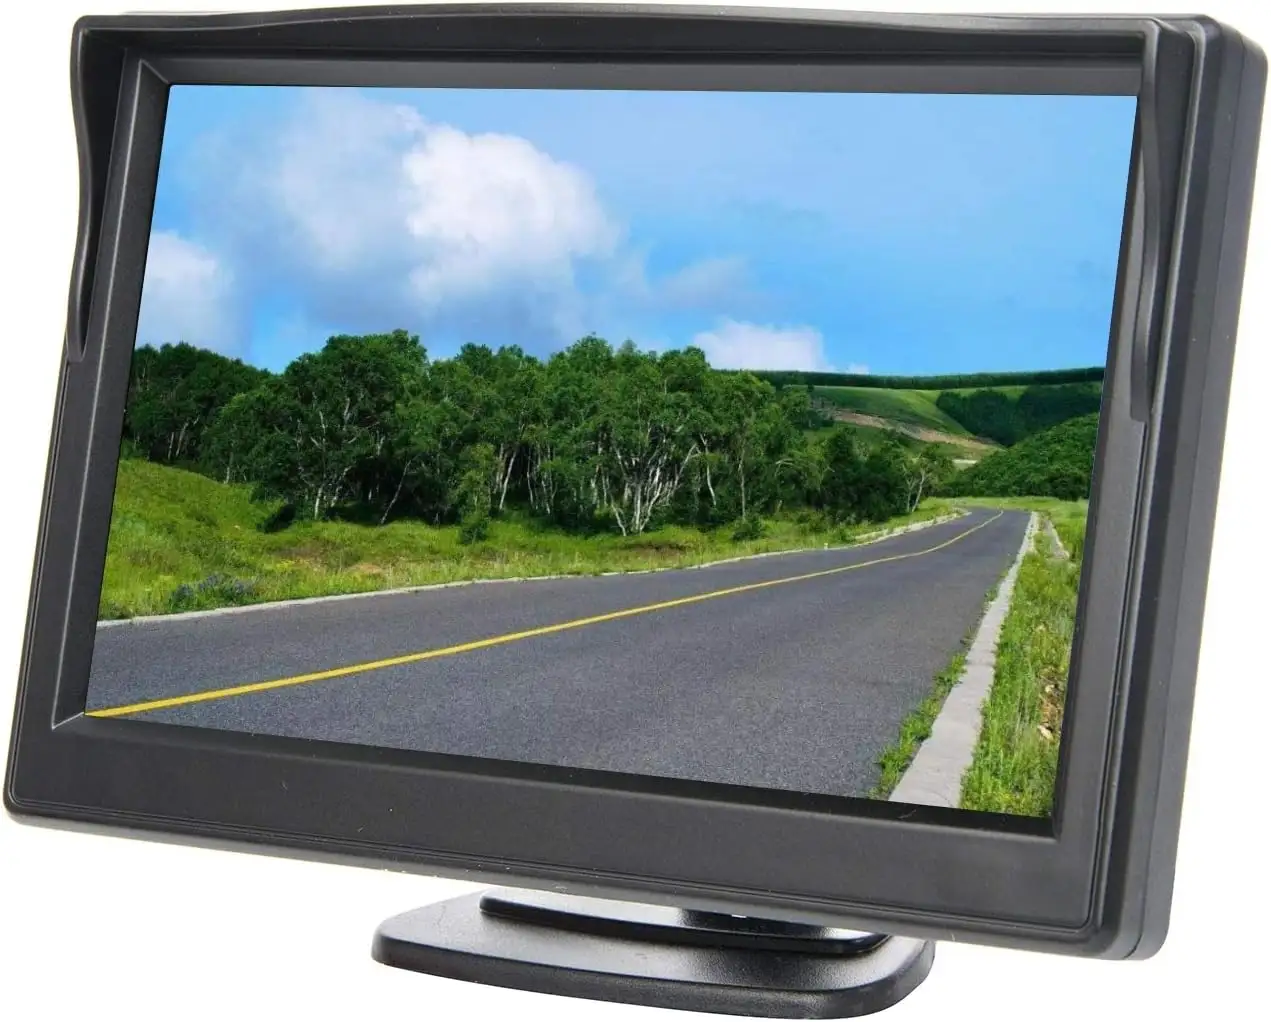 CCTV 5 Zoll TFT LCD Auto Farbe Rückfahr monitor Bildschirm zum Parken Rückfahr kamera mit 2 optionalen Halterung